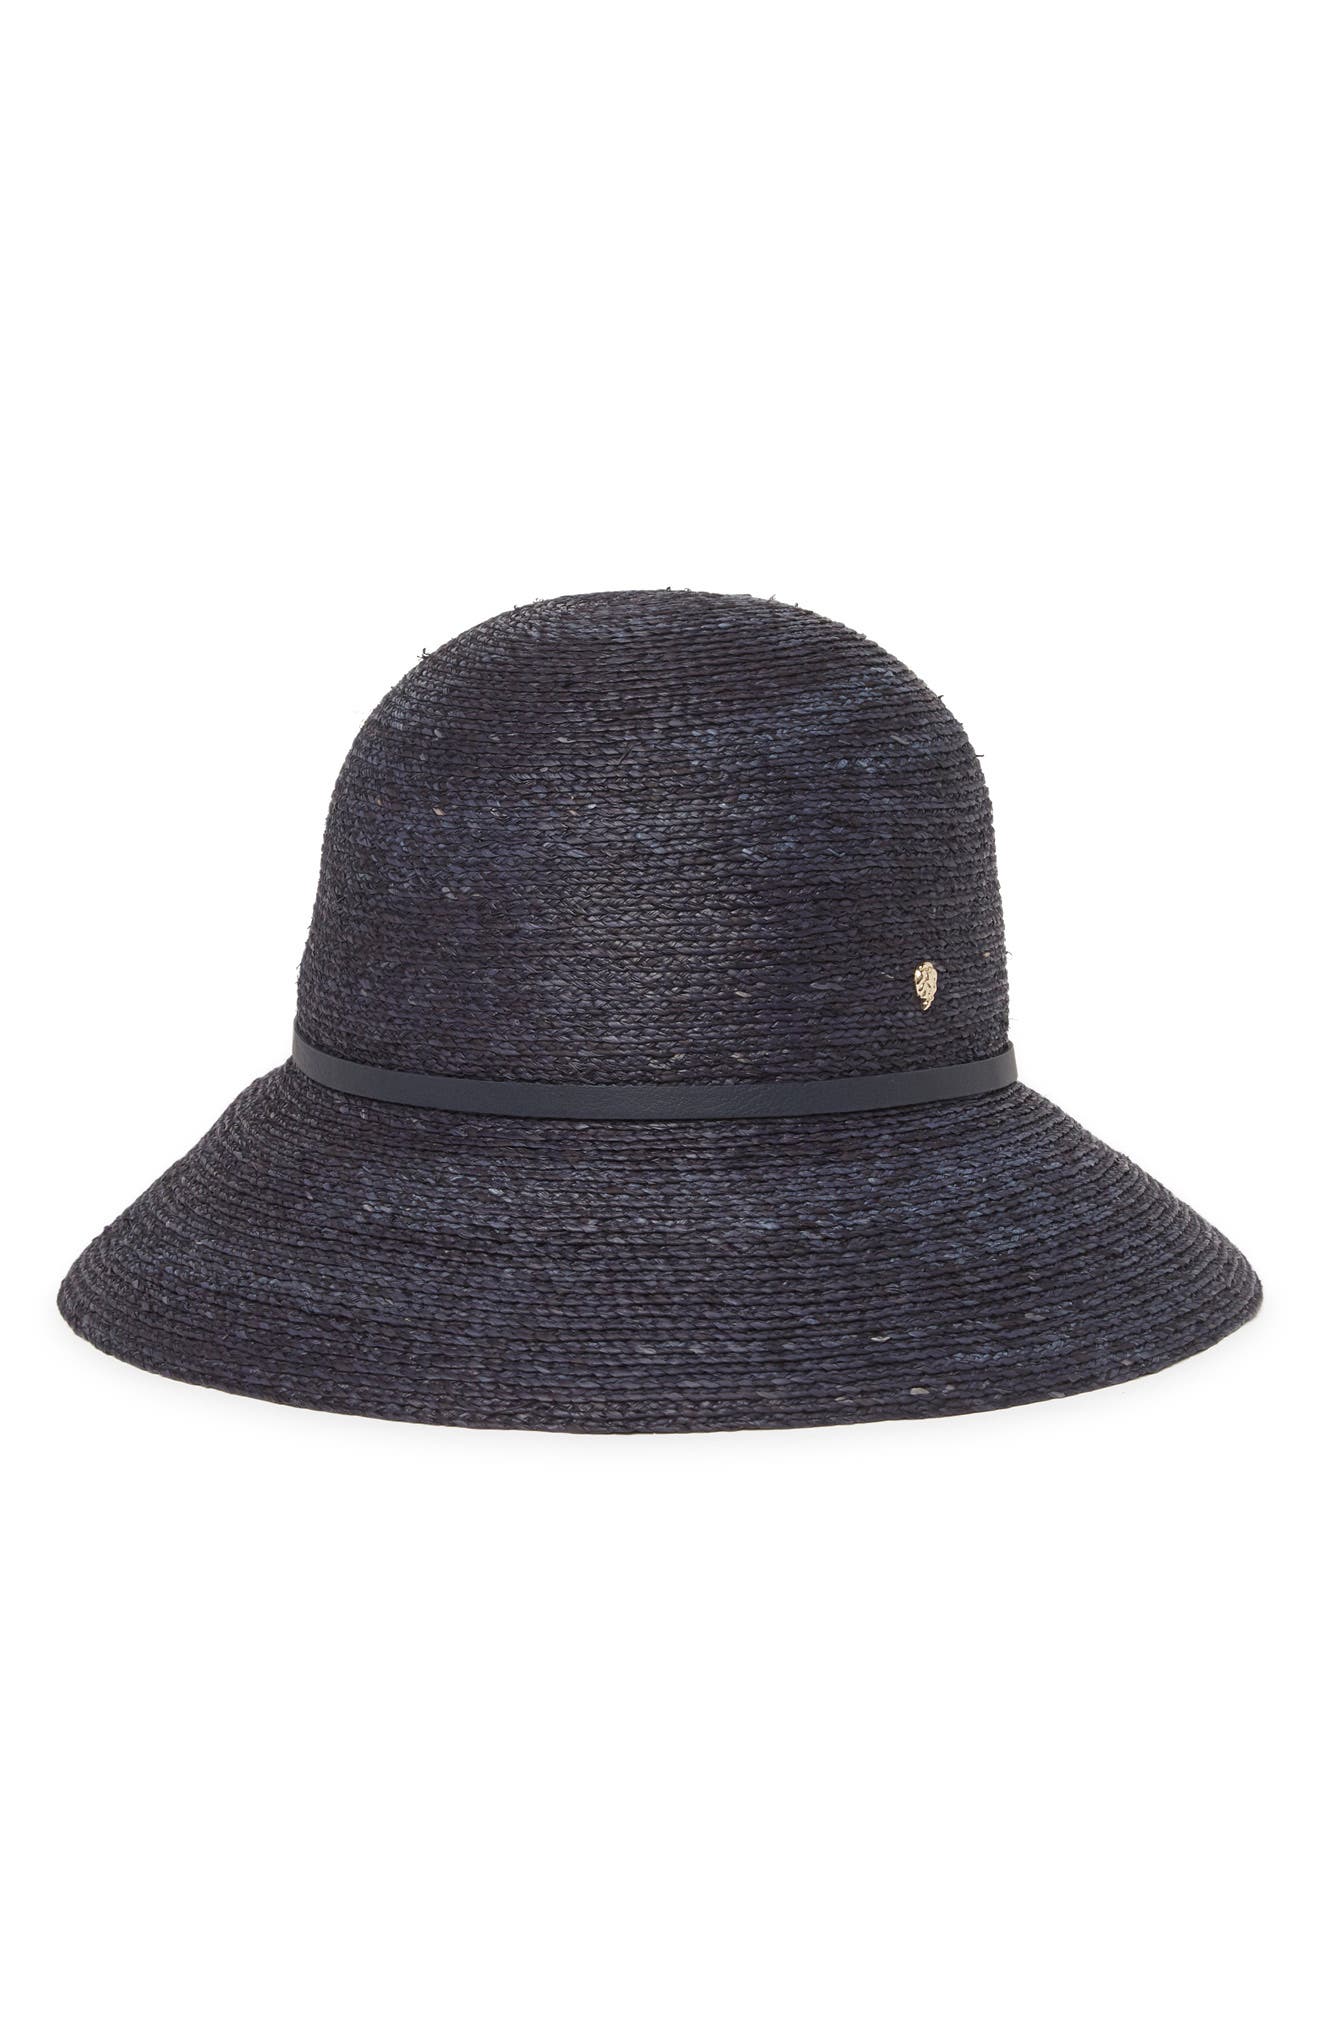 Helen Kaminski Besa 9 Leather Trimmed Cloche Hat In Navy/ocean | ModeSens